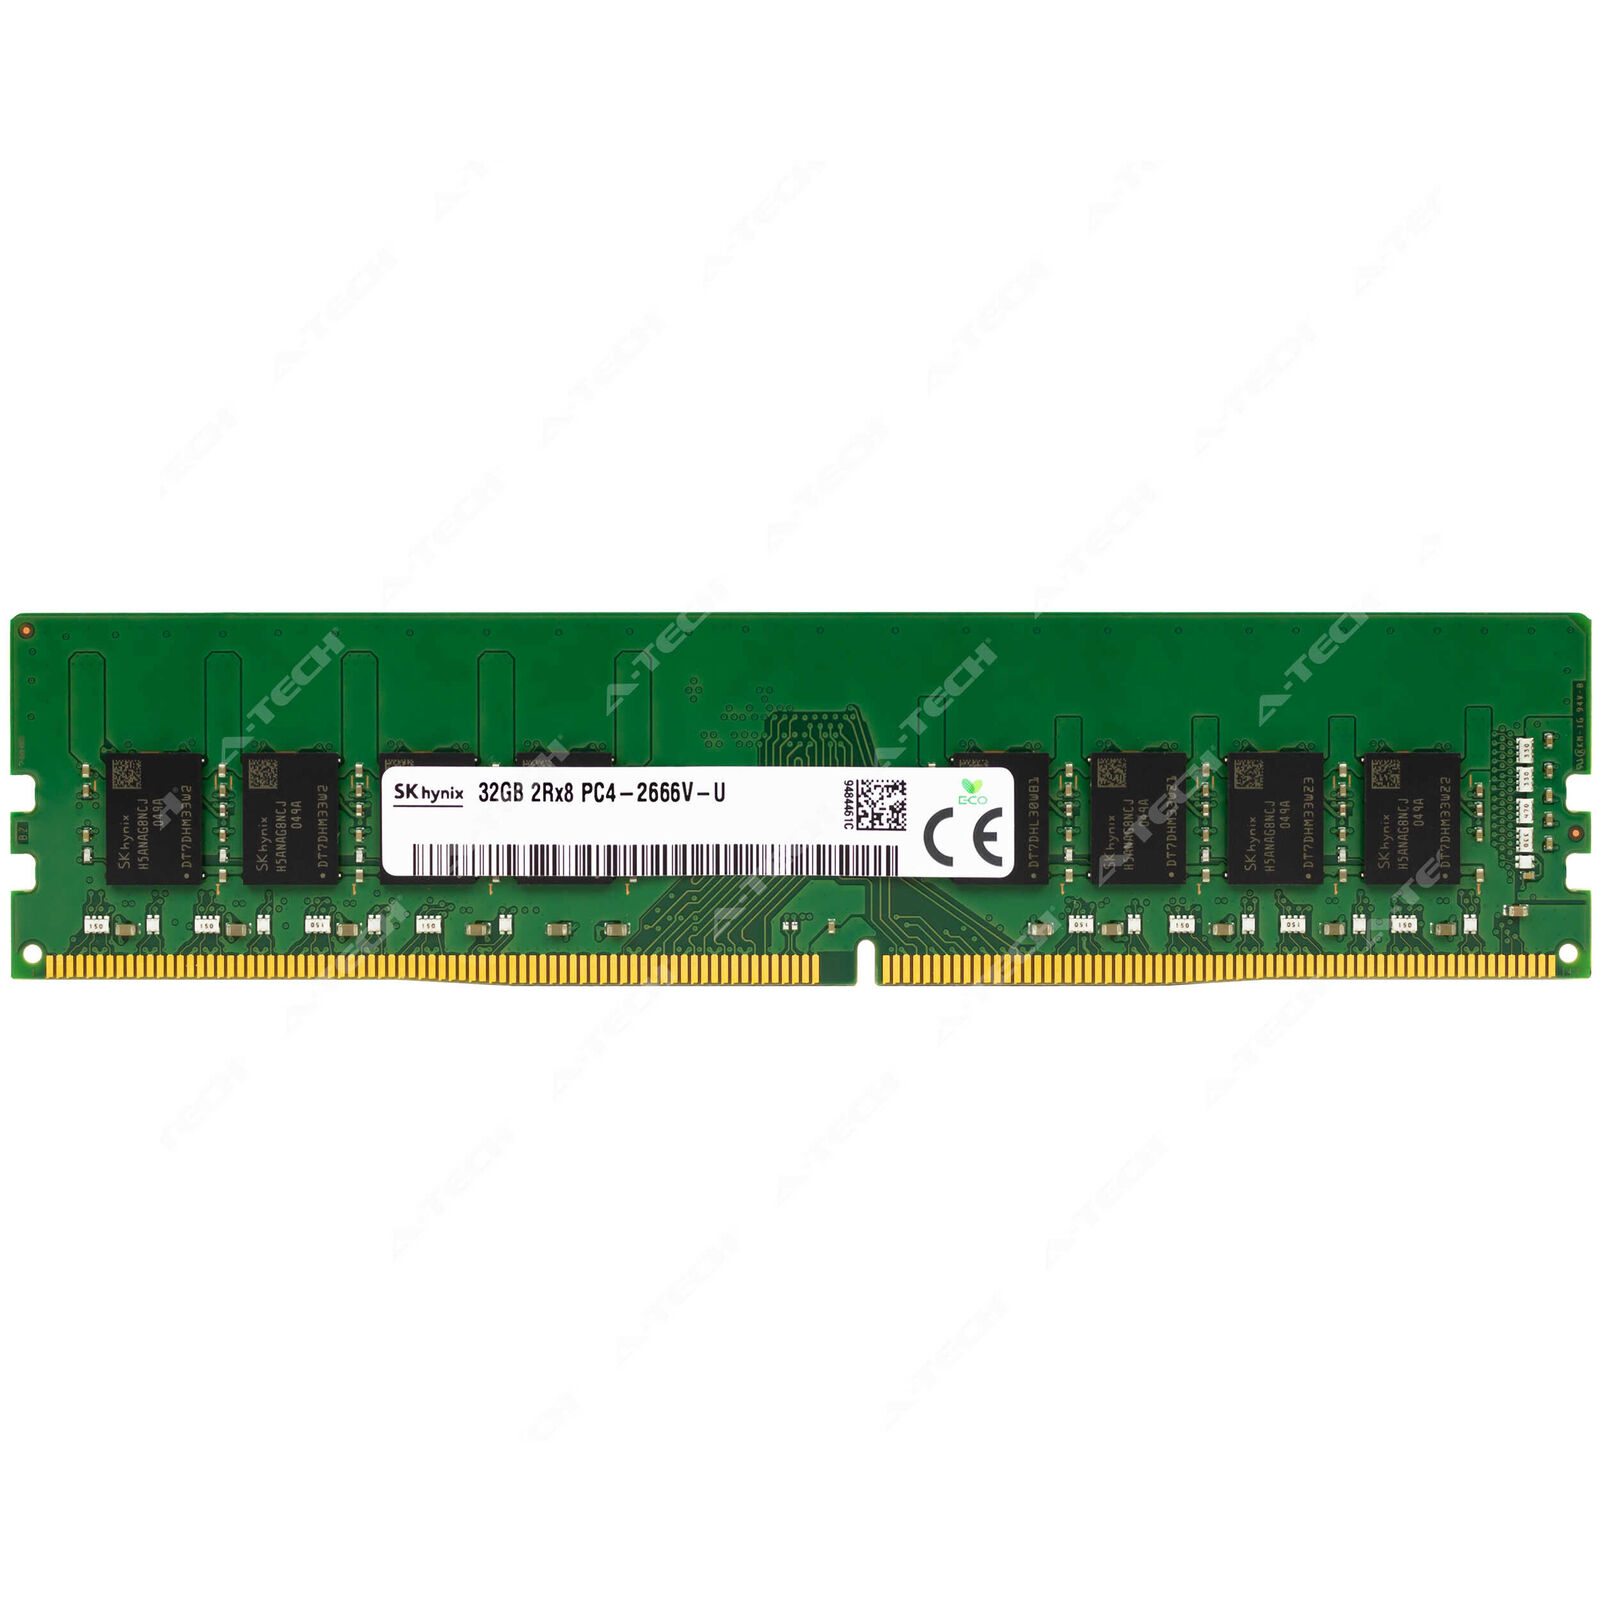 Hynix 32GB 2Rx8 PC4-2666V-U DIMM DDR4-21300 Non-ECC 288-Pin Desktop Memory RAM